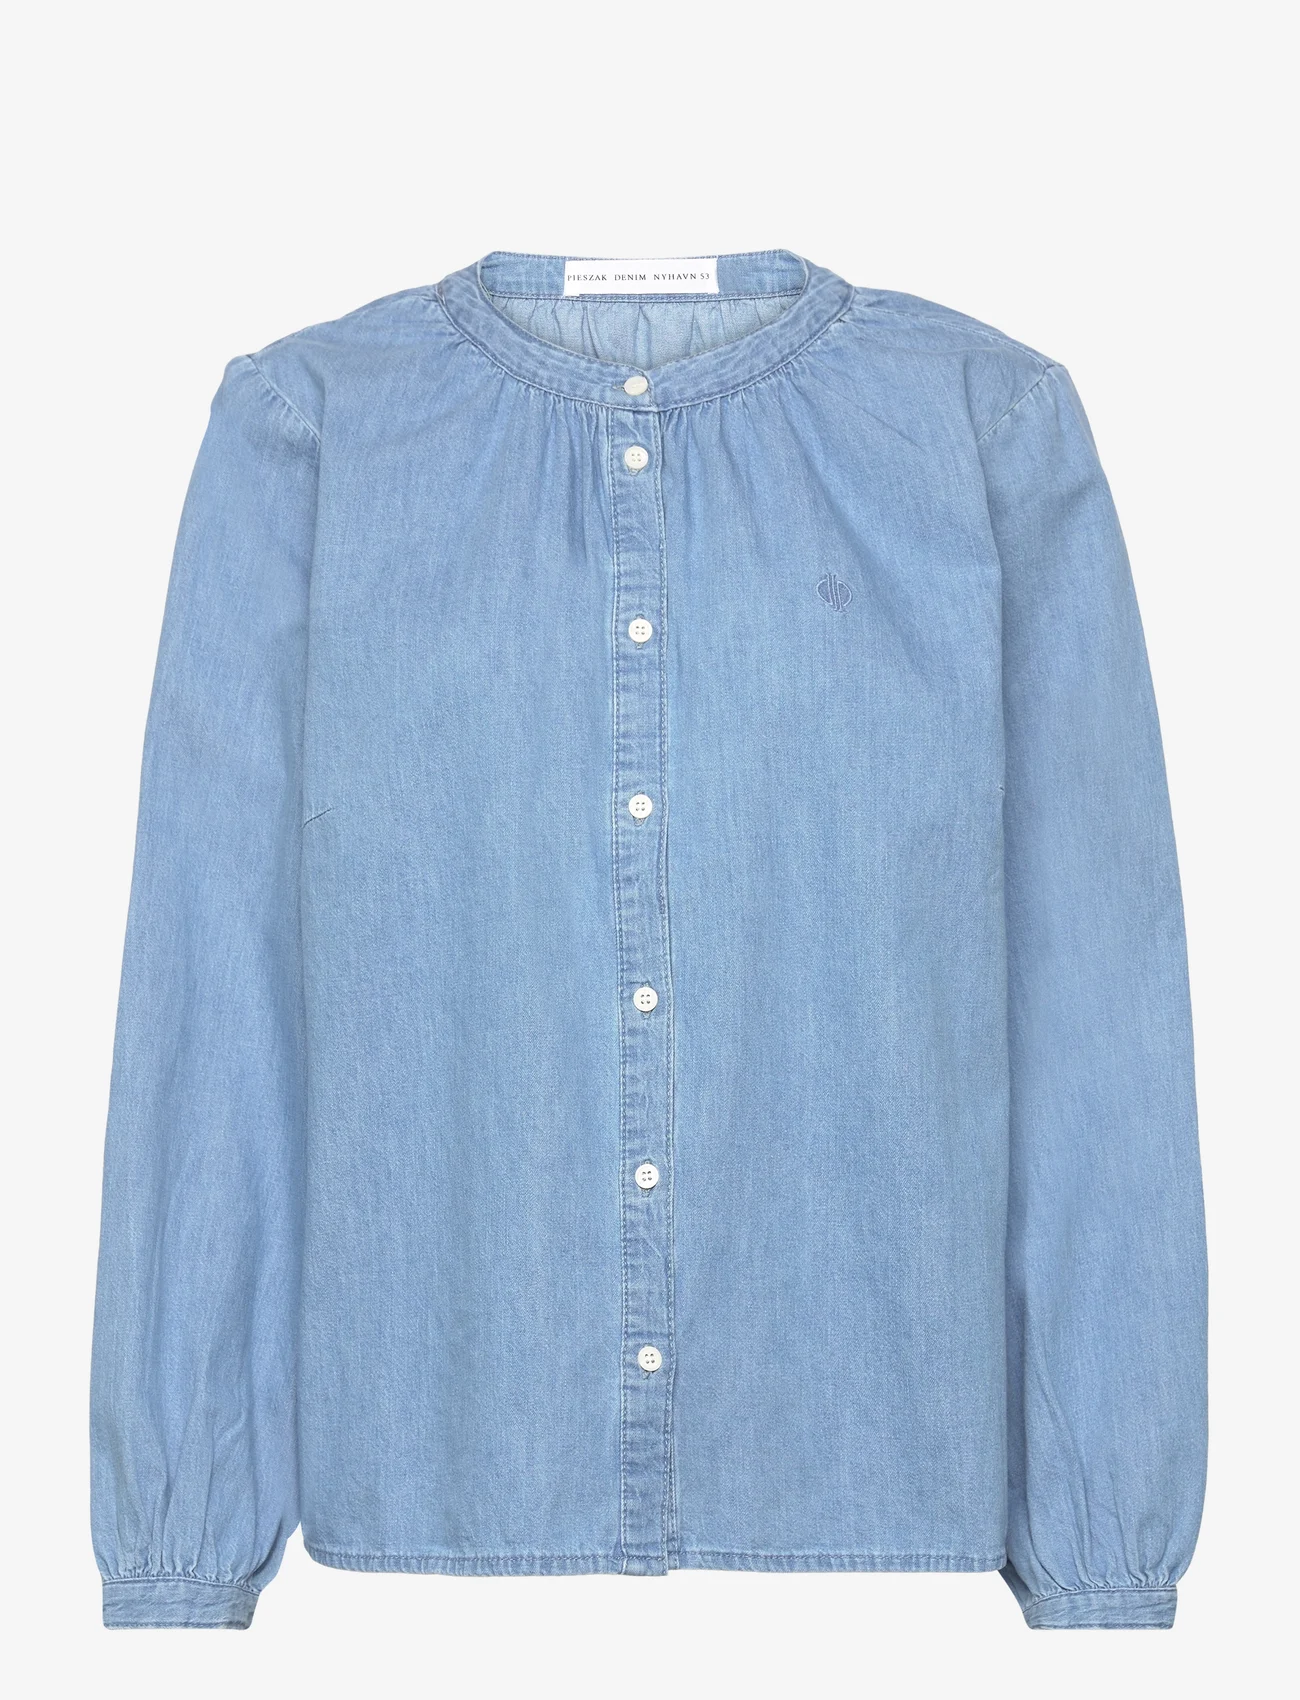 Pieszak - PD-Luna Denim Shirt - jeansblouses - denim blue - 0